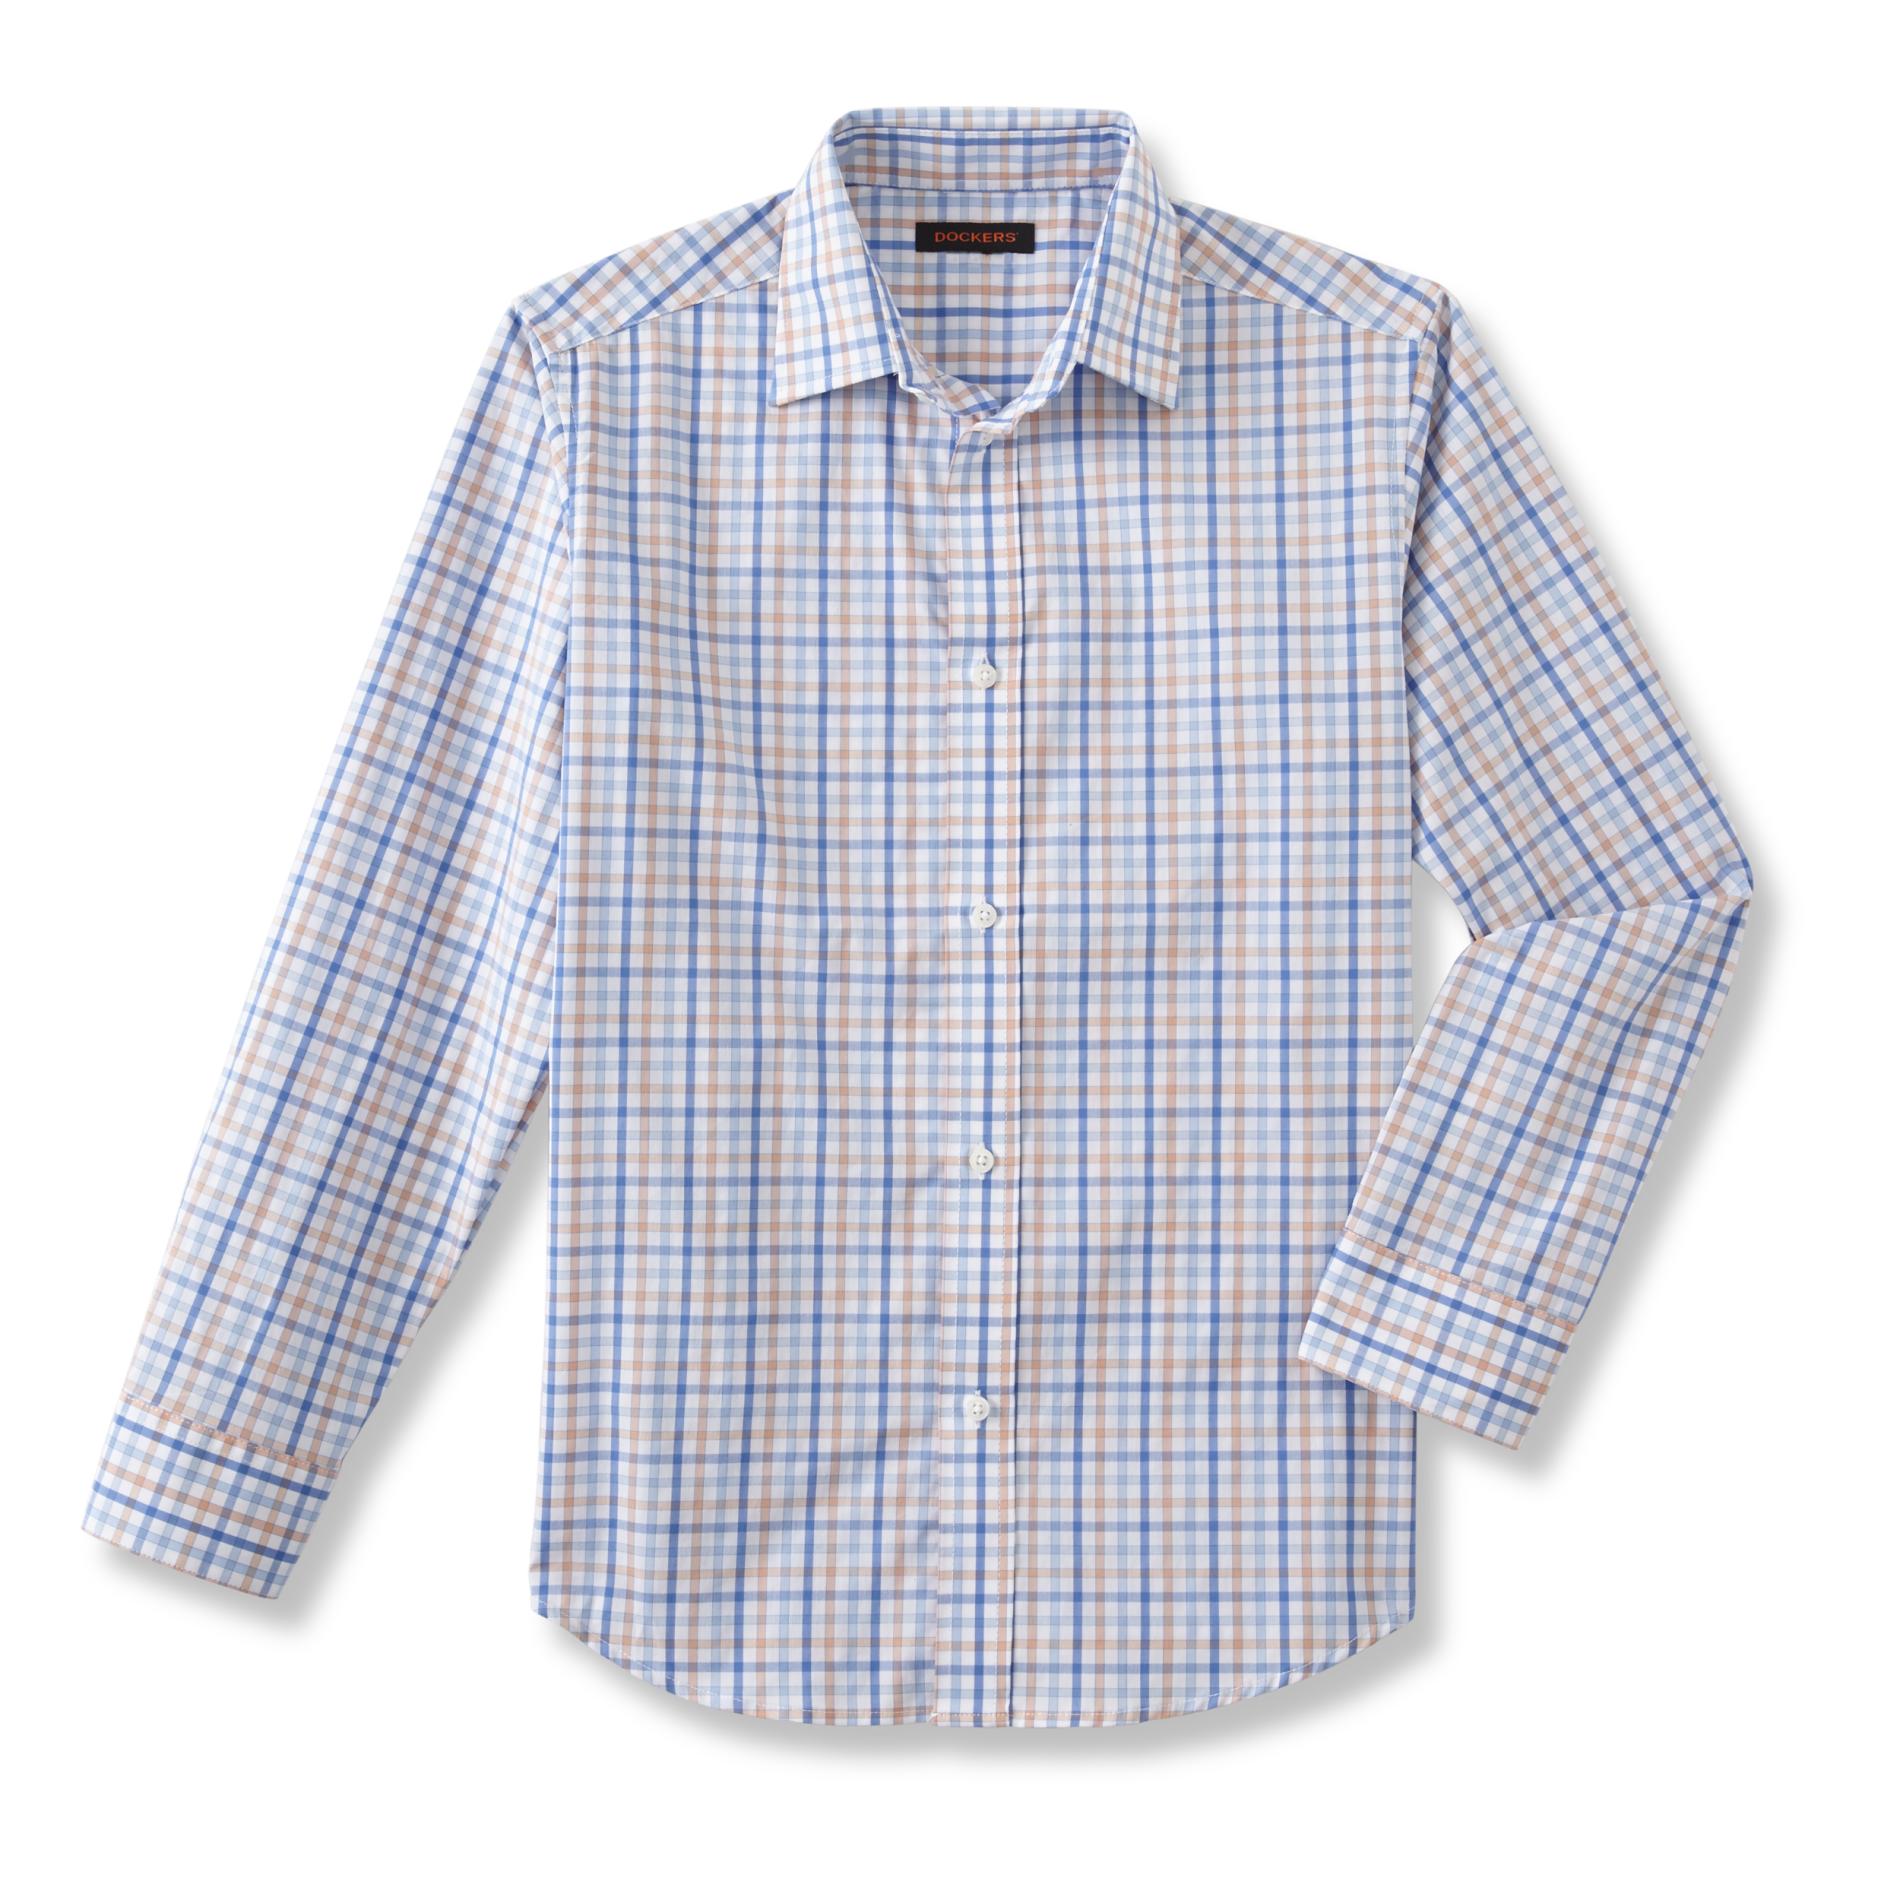 Dockers Boys' Button-Front Shirt - Plaid